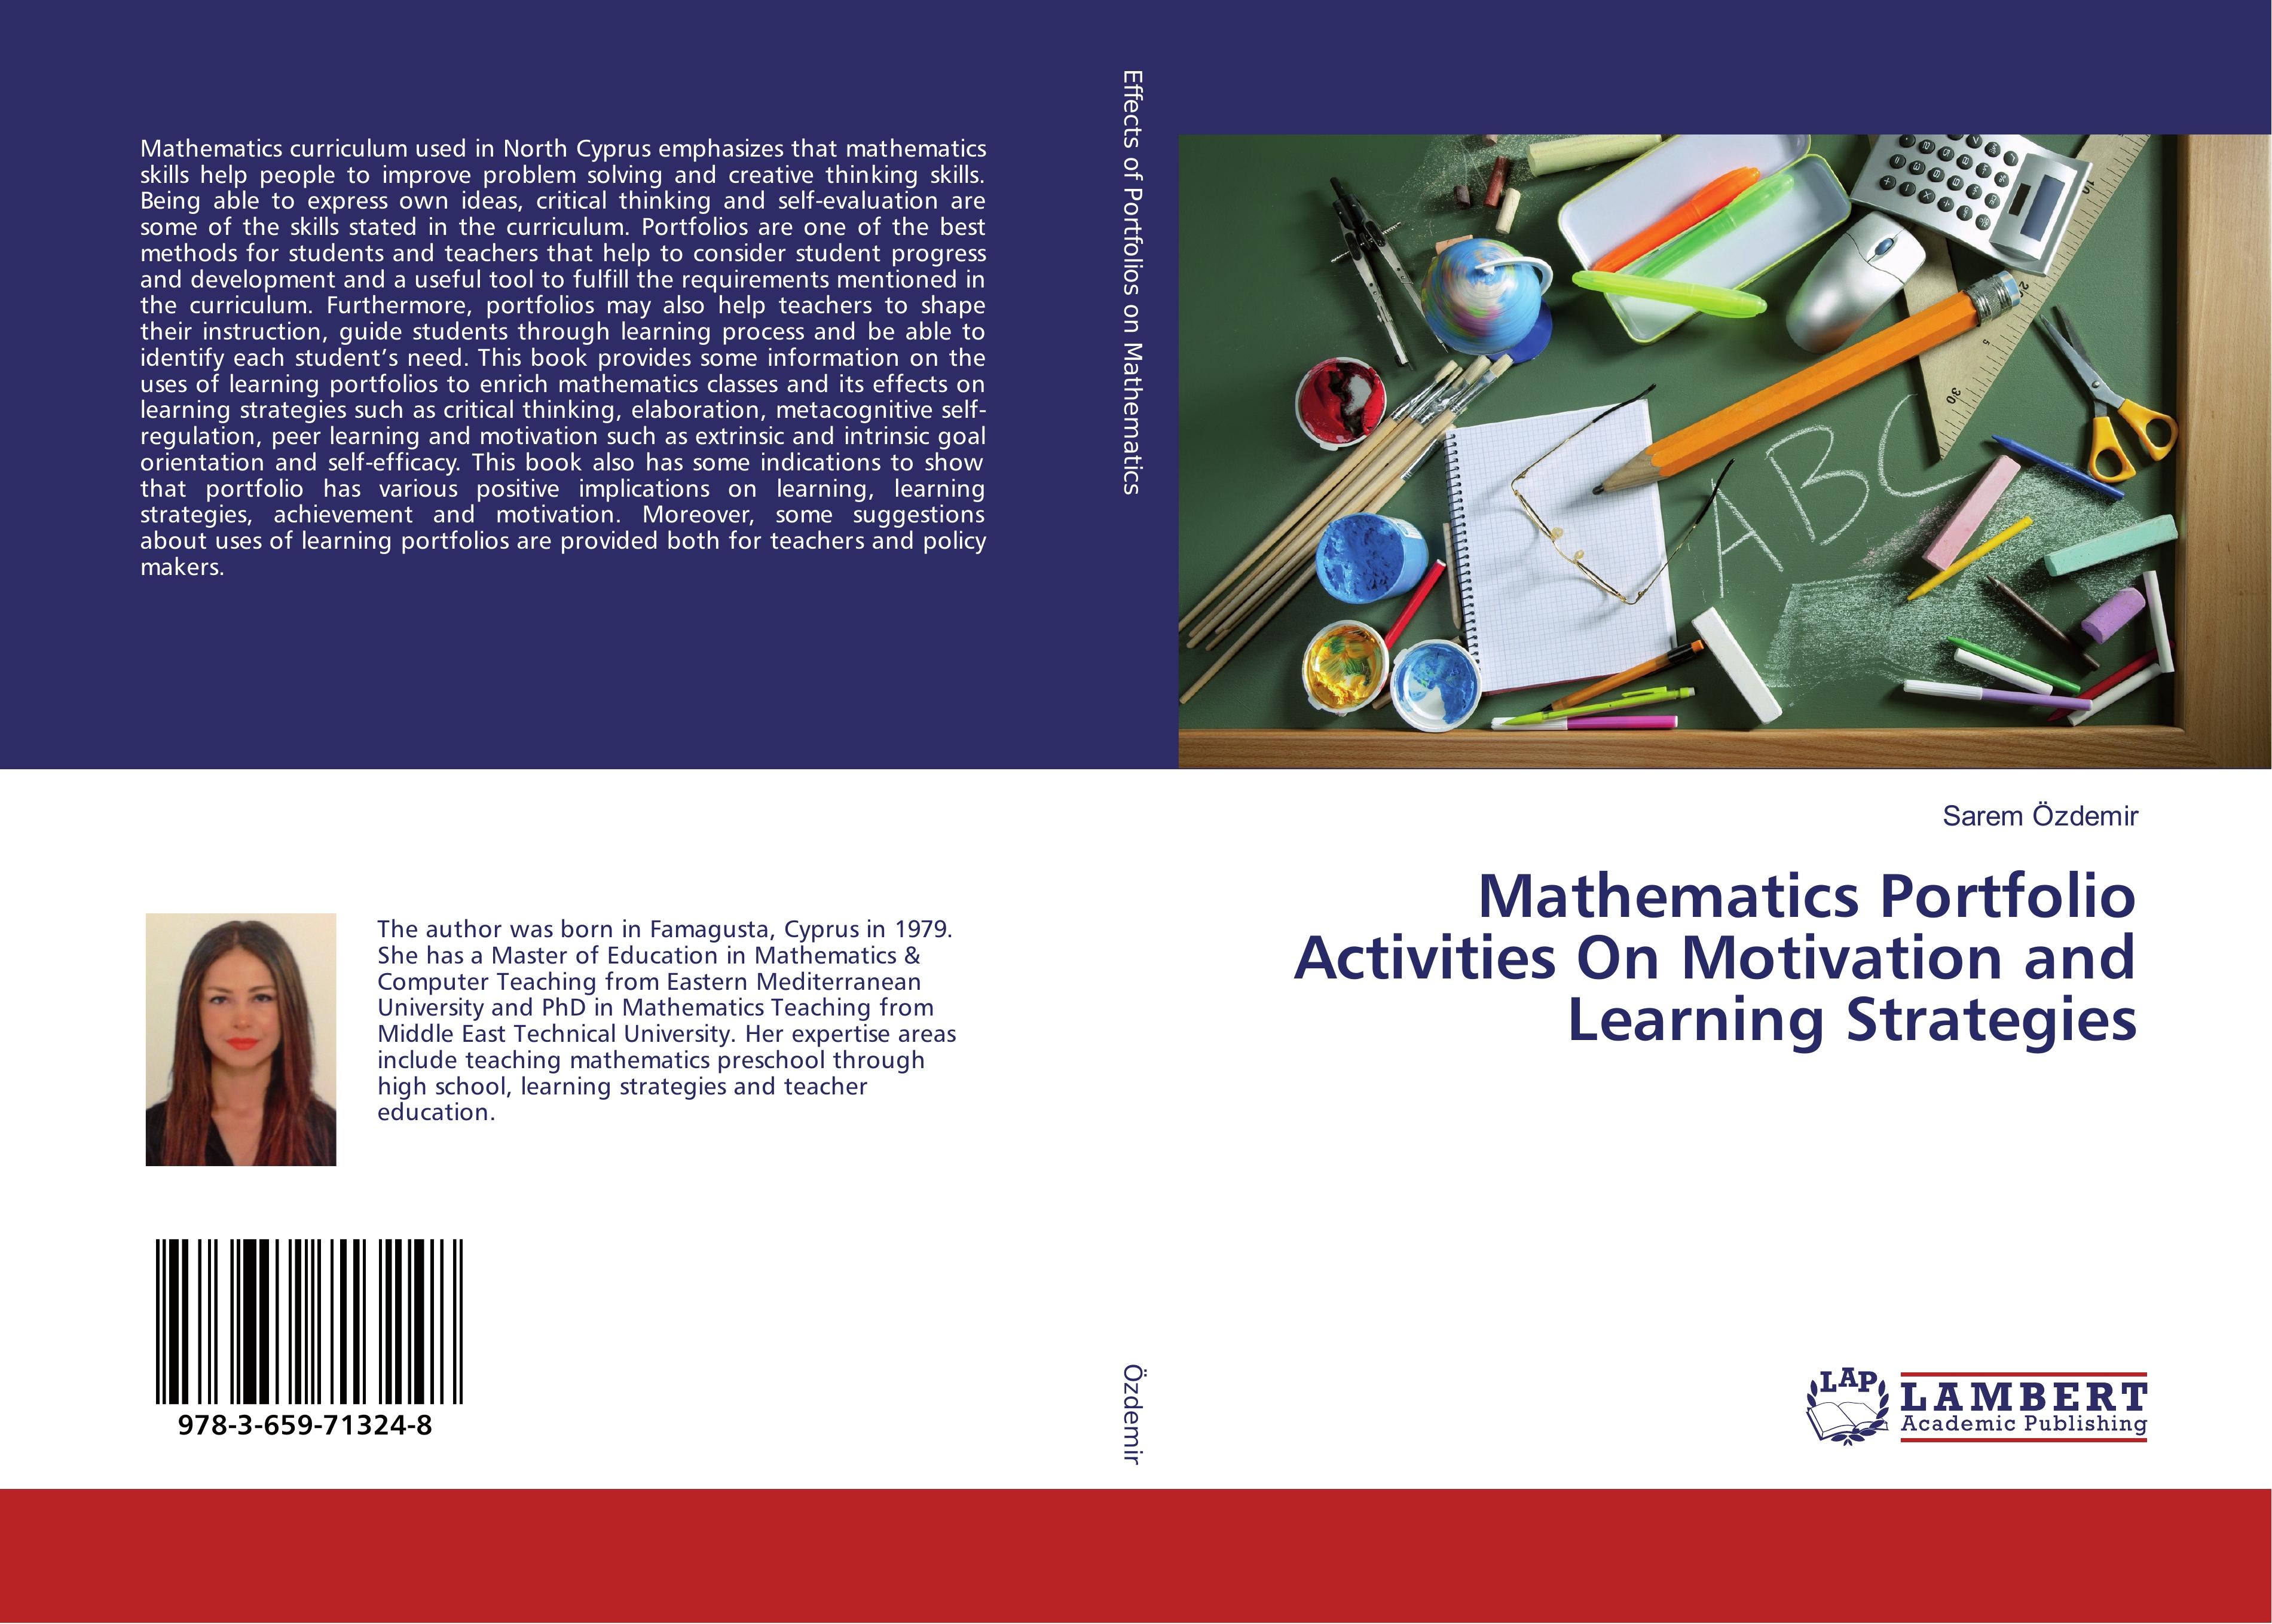 Mathematics Portfolio Activities On Motivation and Learning Strategies - Sarem Oezdemir